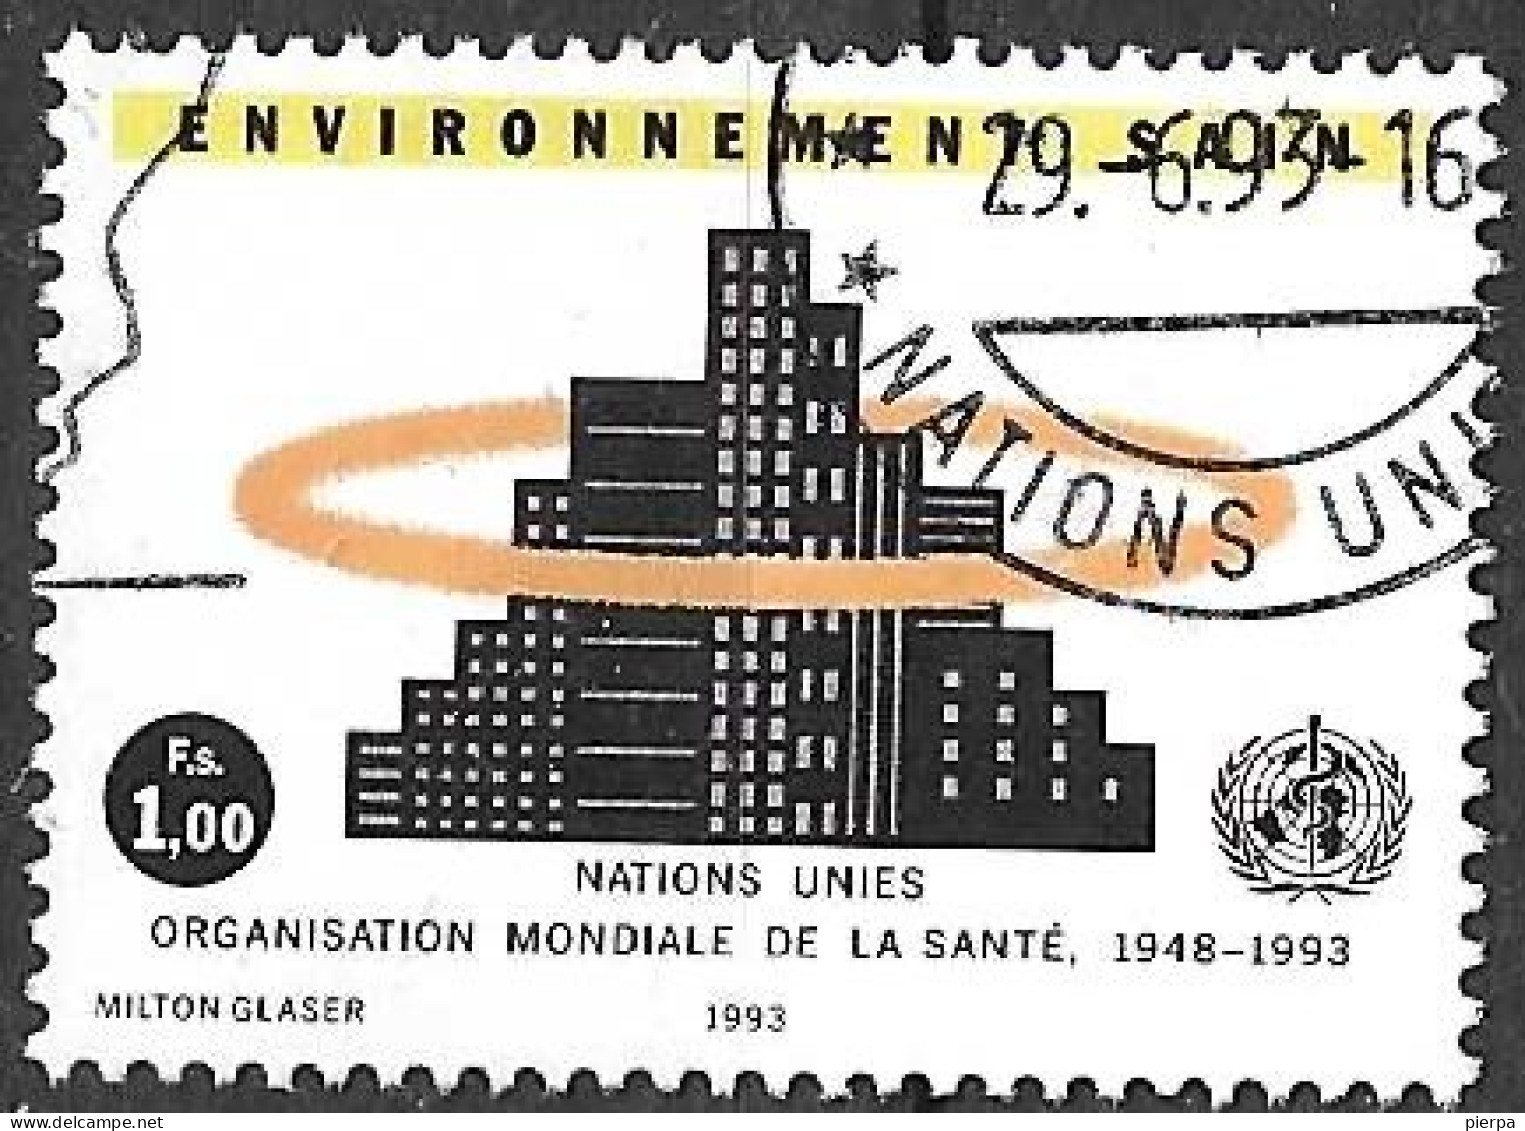 O.N.U. GENEVE - 1993 - PRO AMBIENTE - FR. 1,00 -  USATO (YVERT 234 - MICHEL 232) - Usati